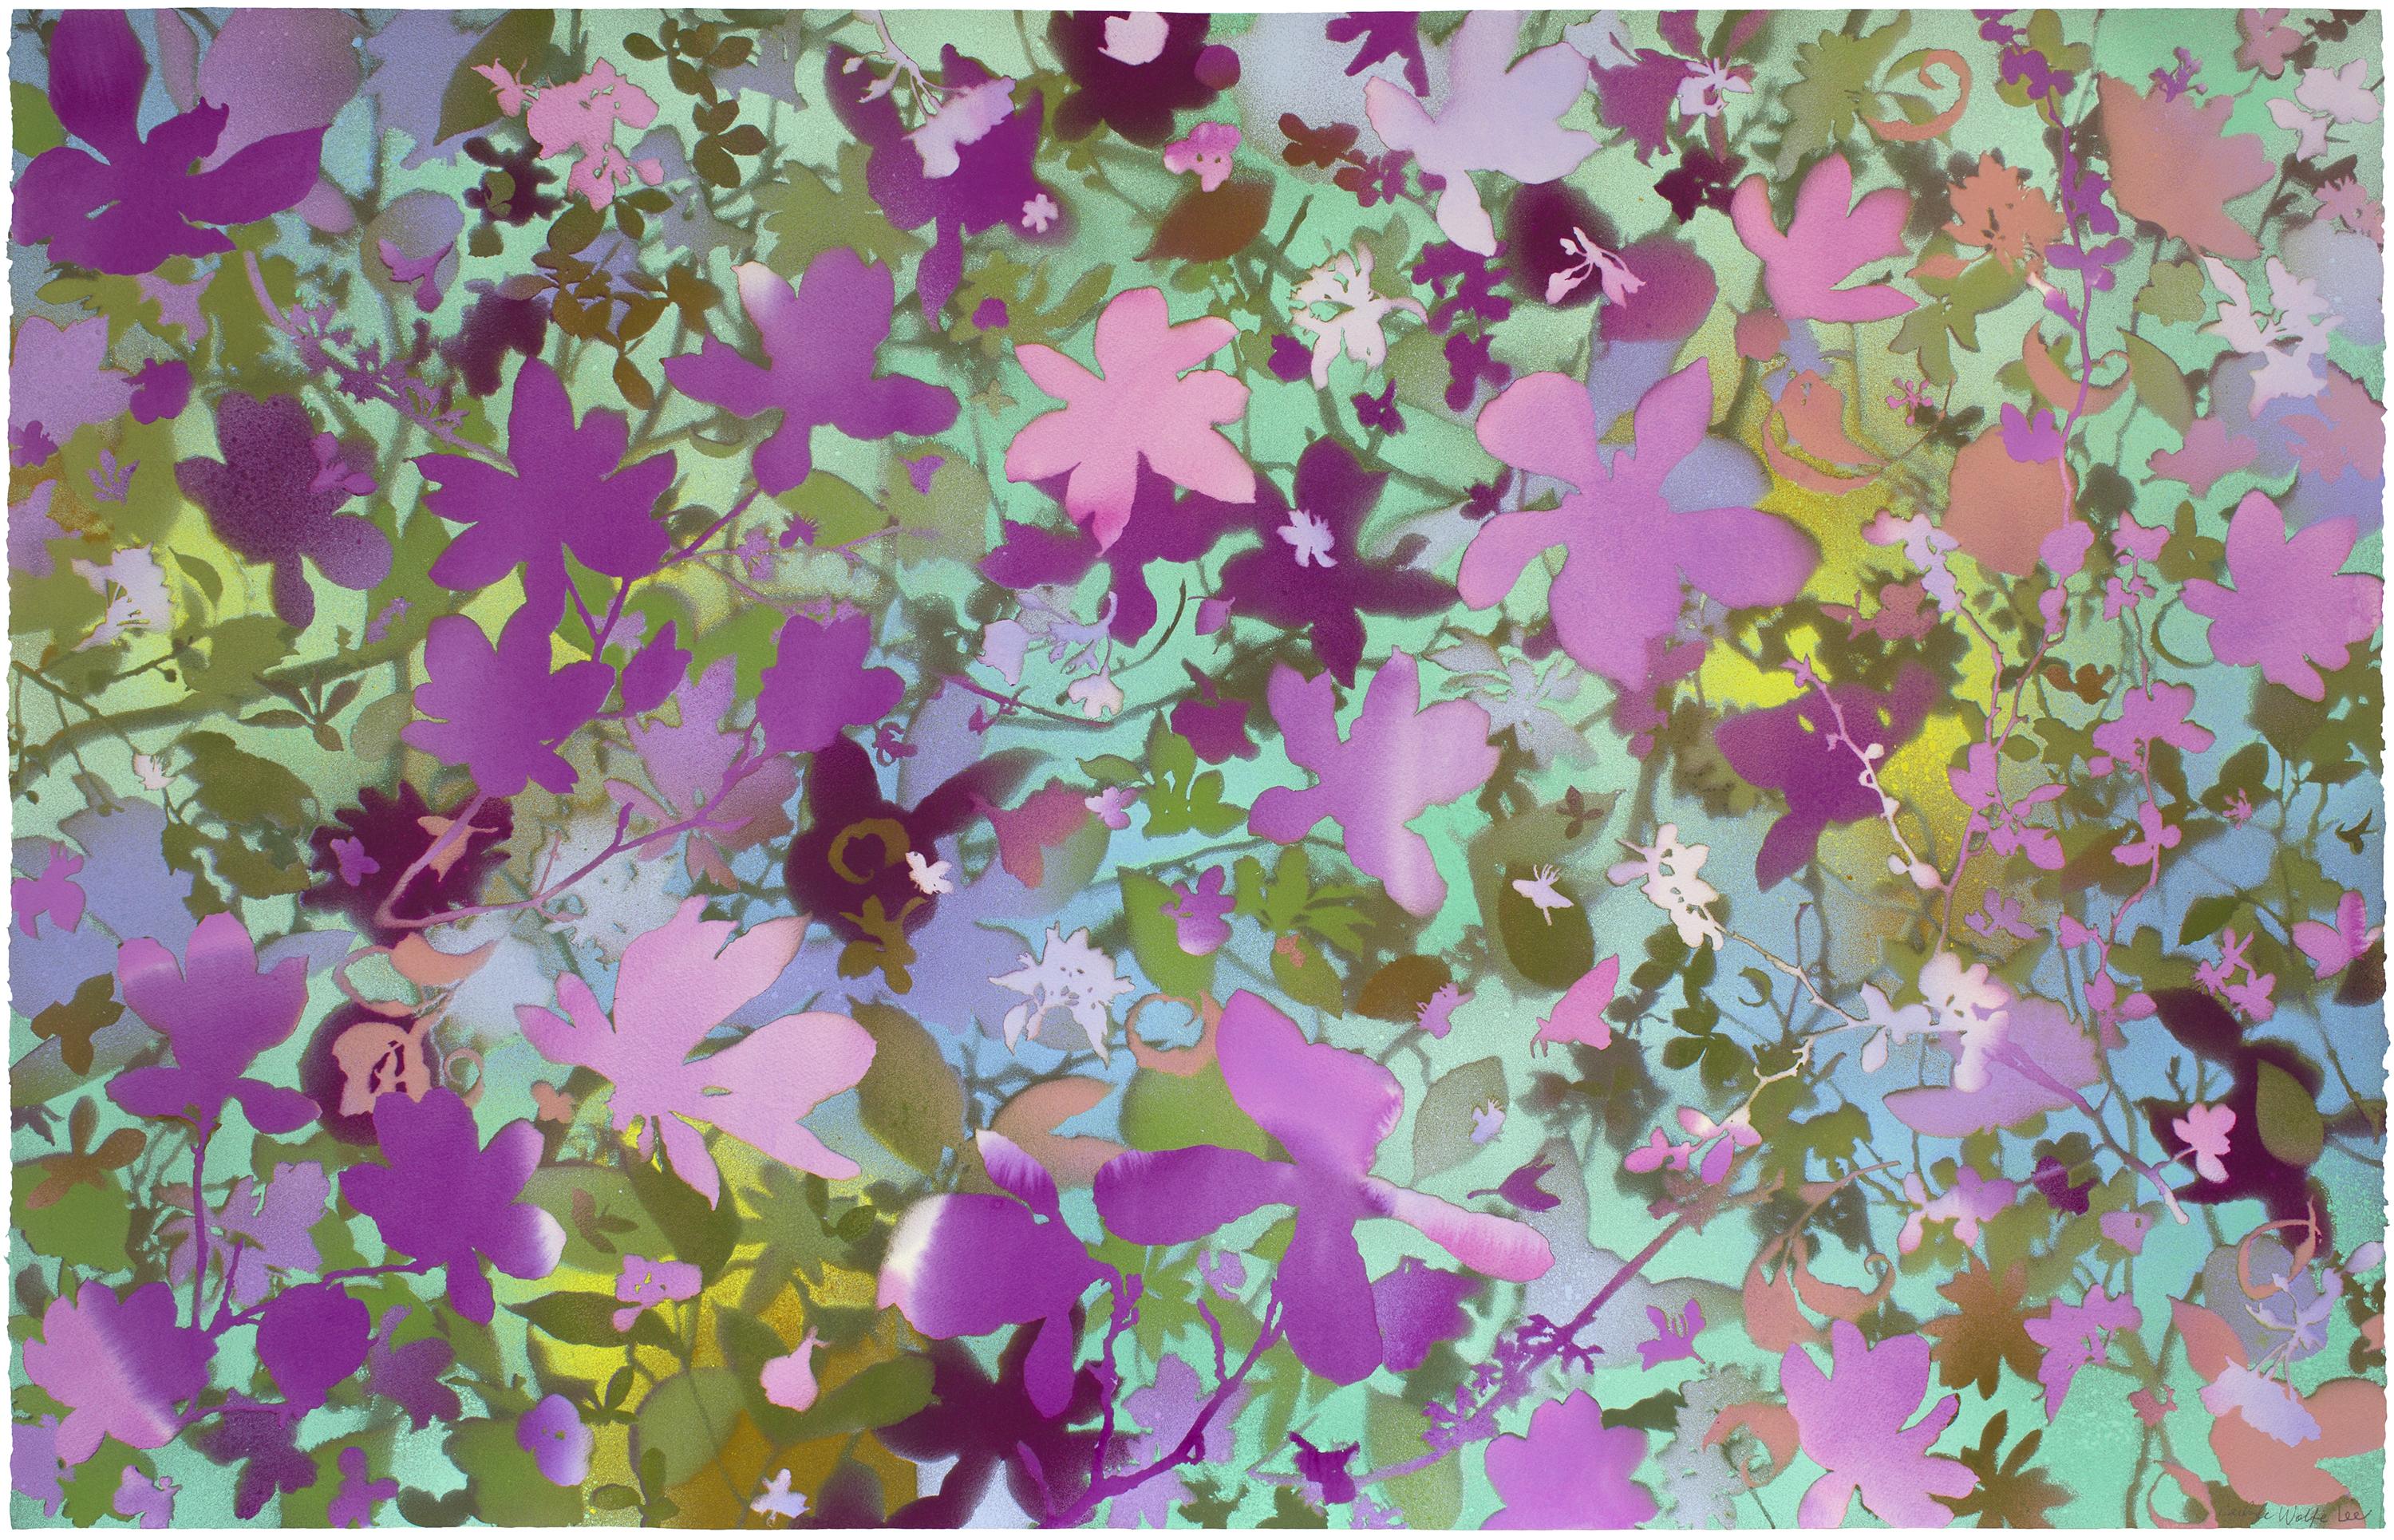 Abstract Painting Carlyle Wolfe Lee - Spring at Home" - paysage naturaliste, coloré, botanique, stratifié, magnolia